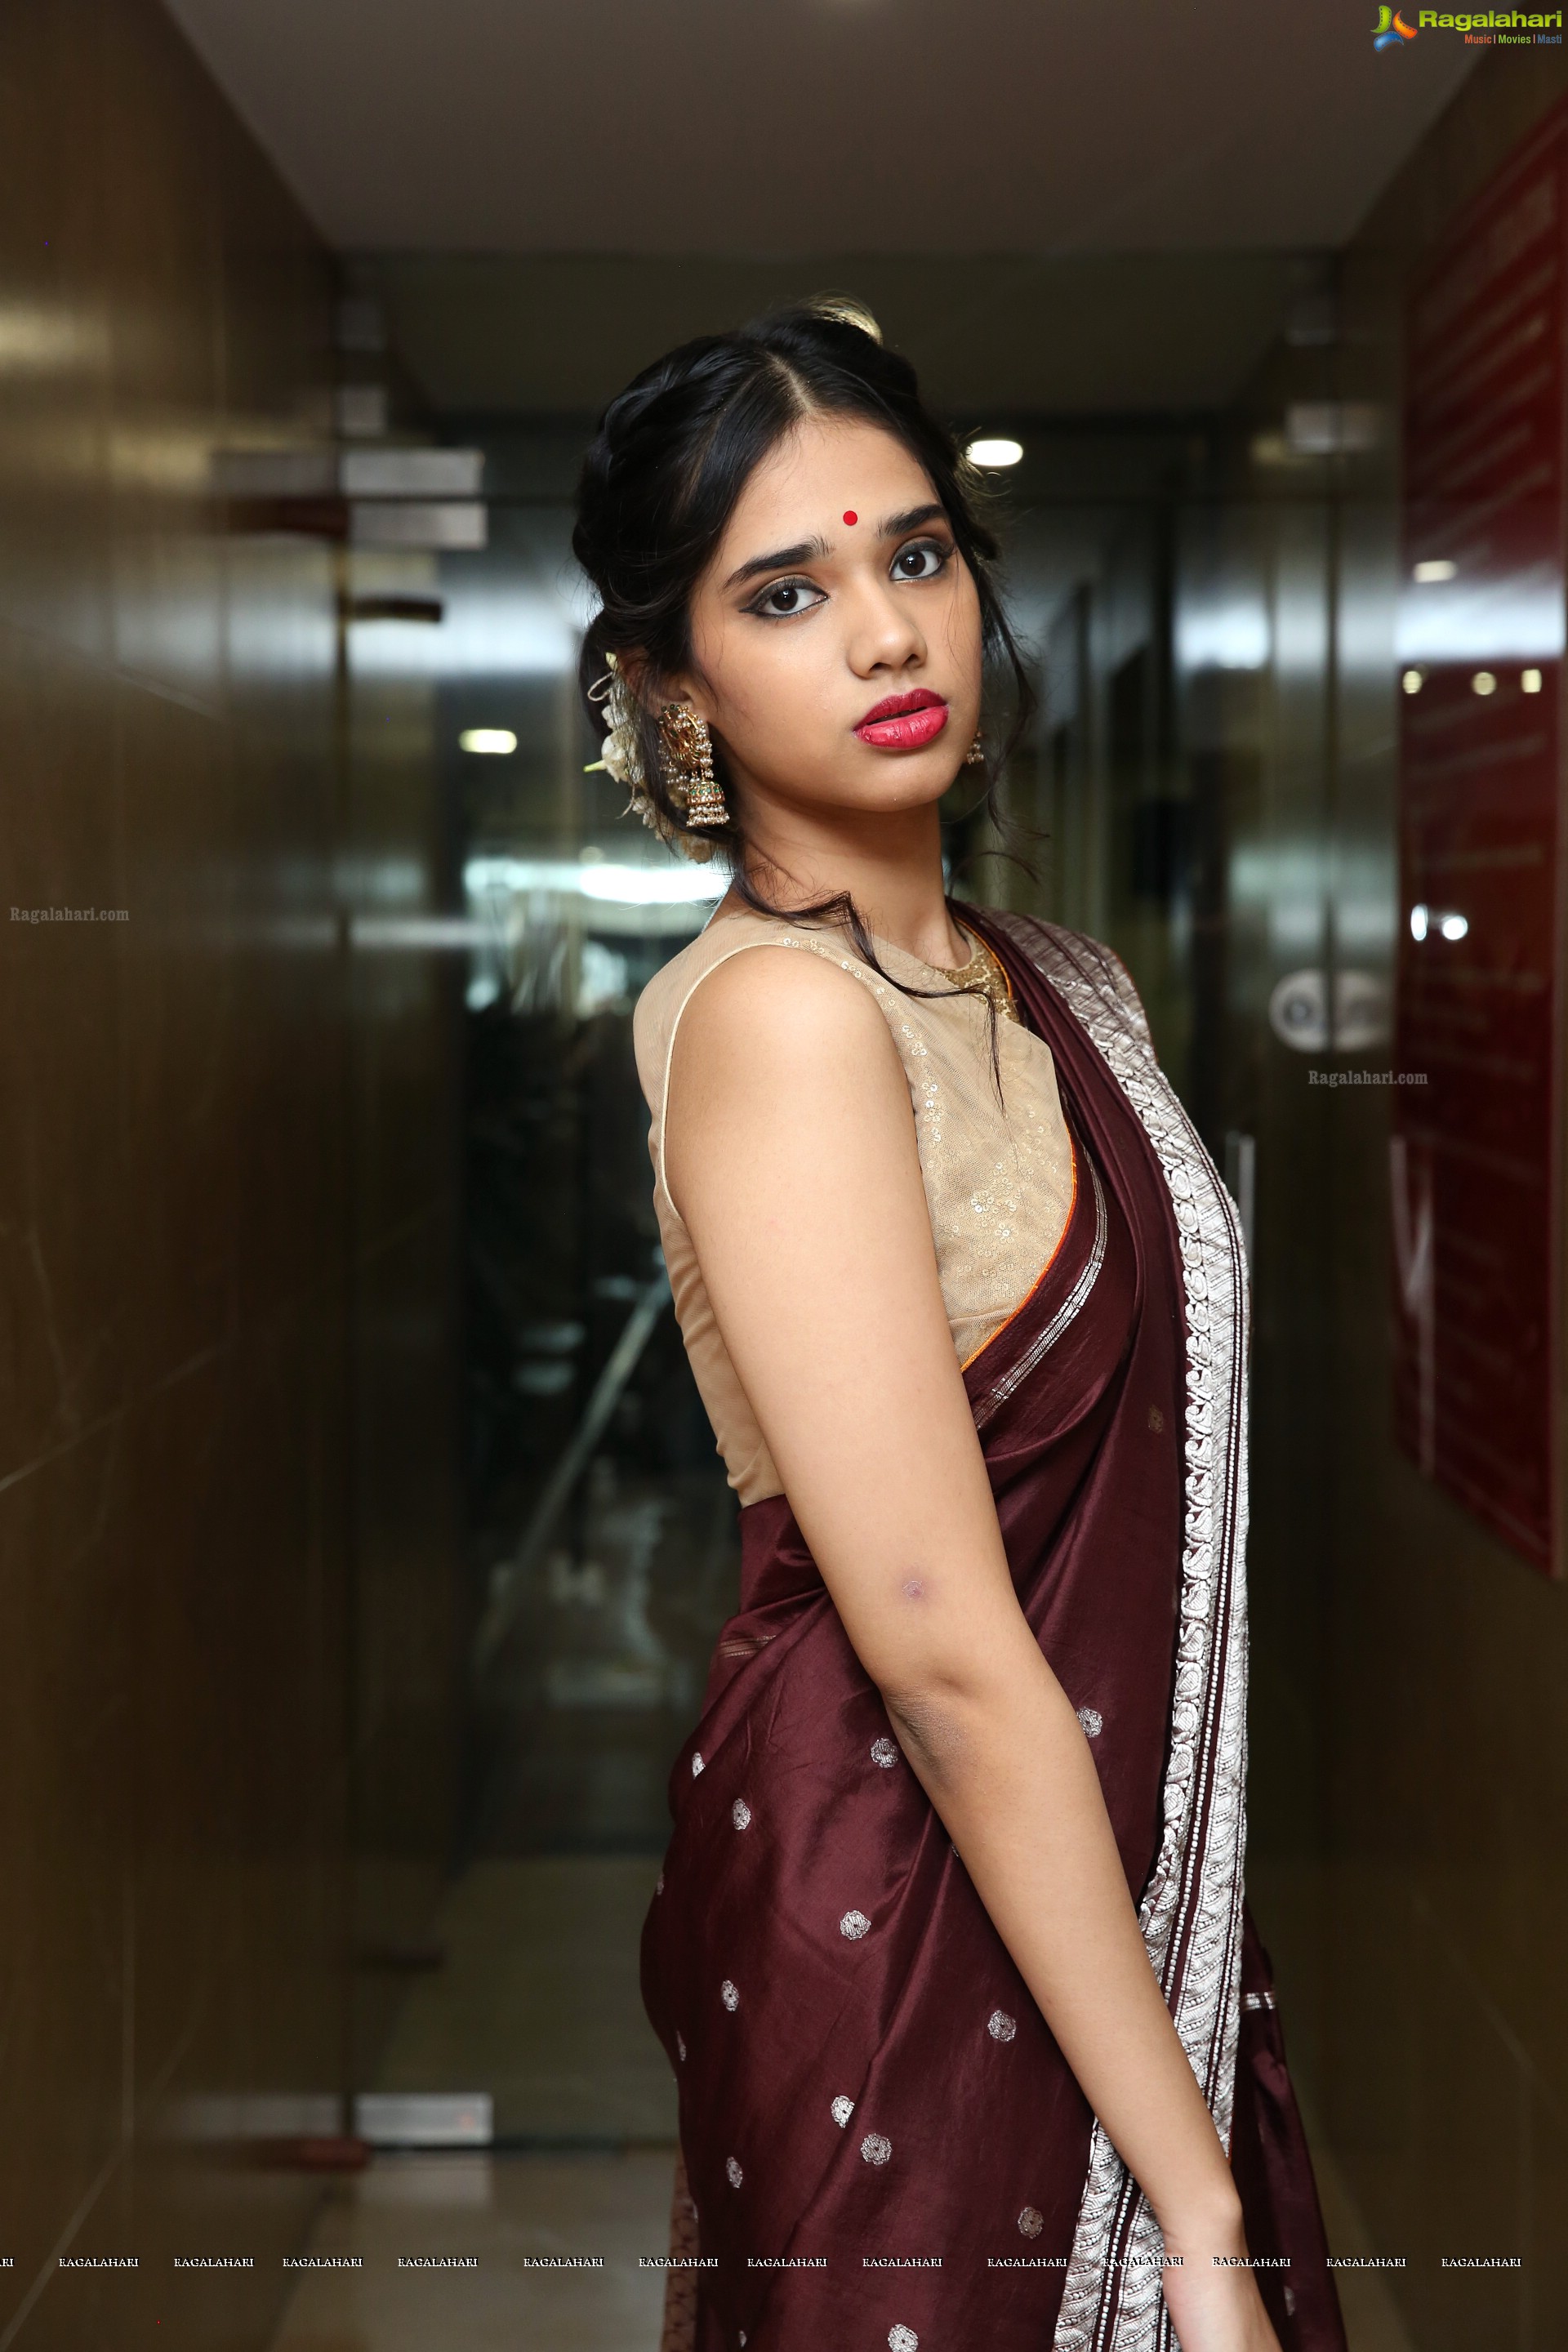 Tanvi Akaanksha Koppineedi @ 'The Temple View' Ballroom Launch at Hotel Adobe - HD Gallery